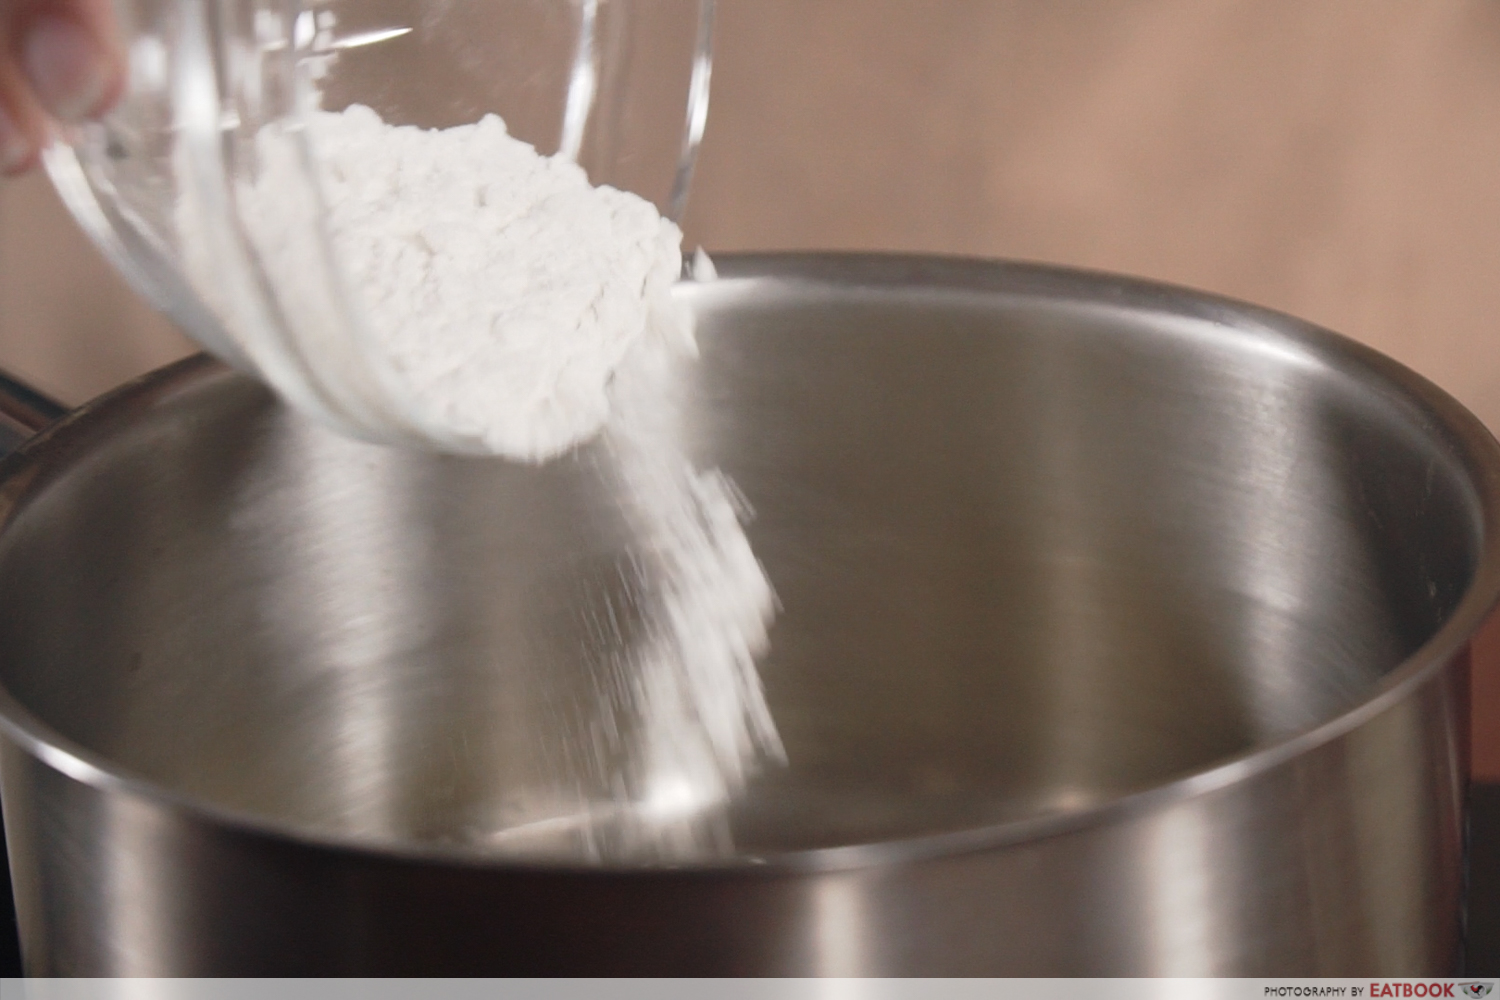 IKEA Meatballs recipe - Addition of flour